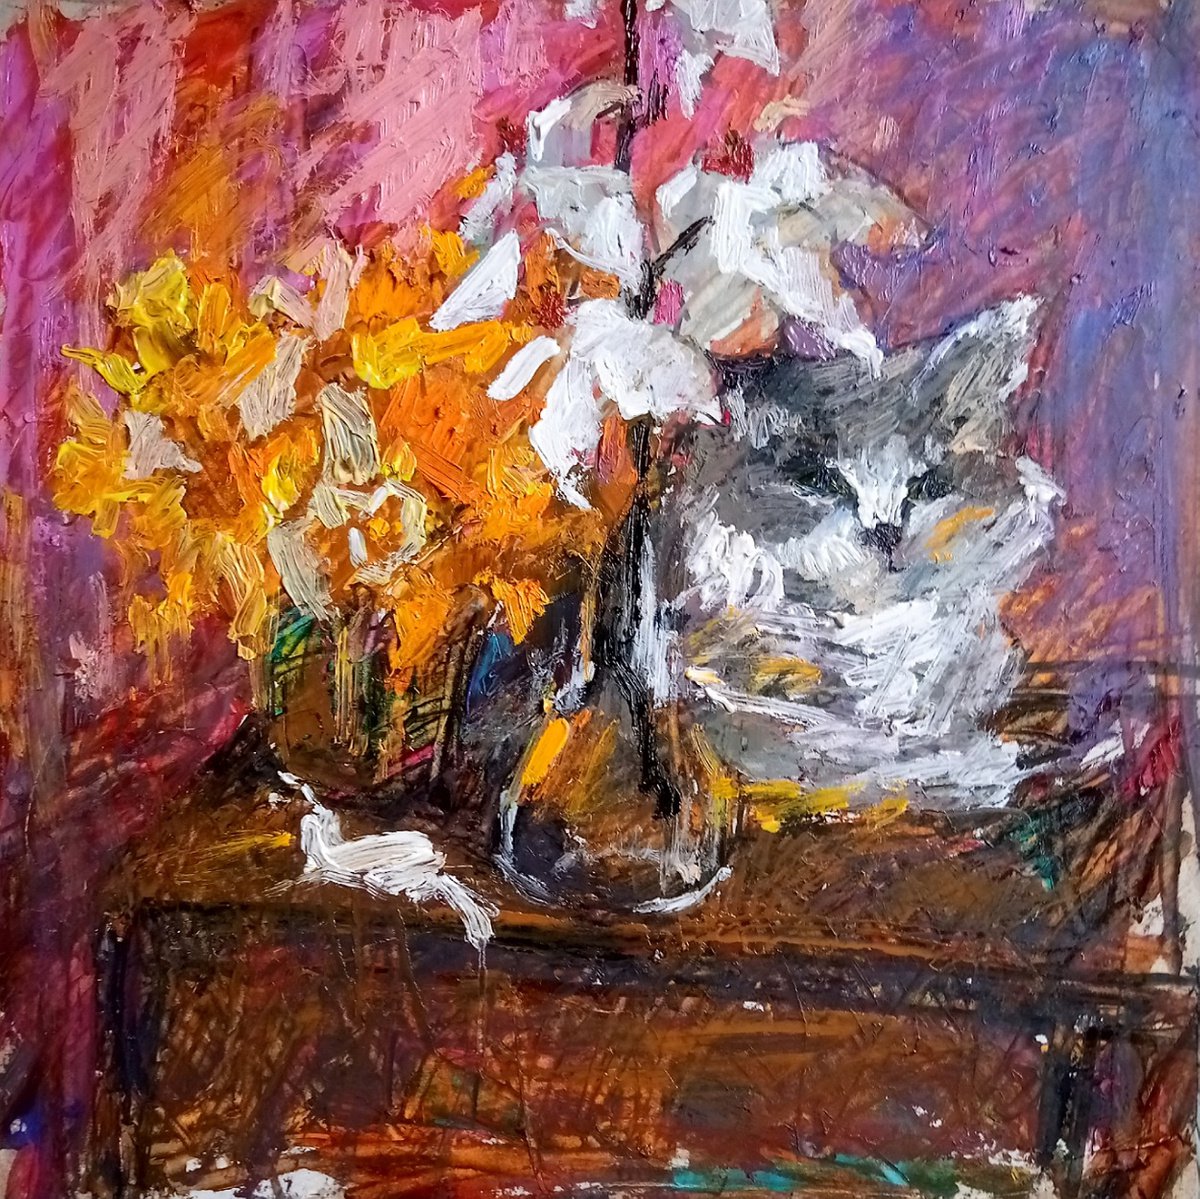 Cat, daffodils, magnolia by Valerie Lazareva